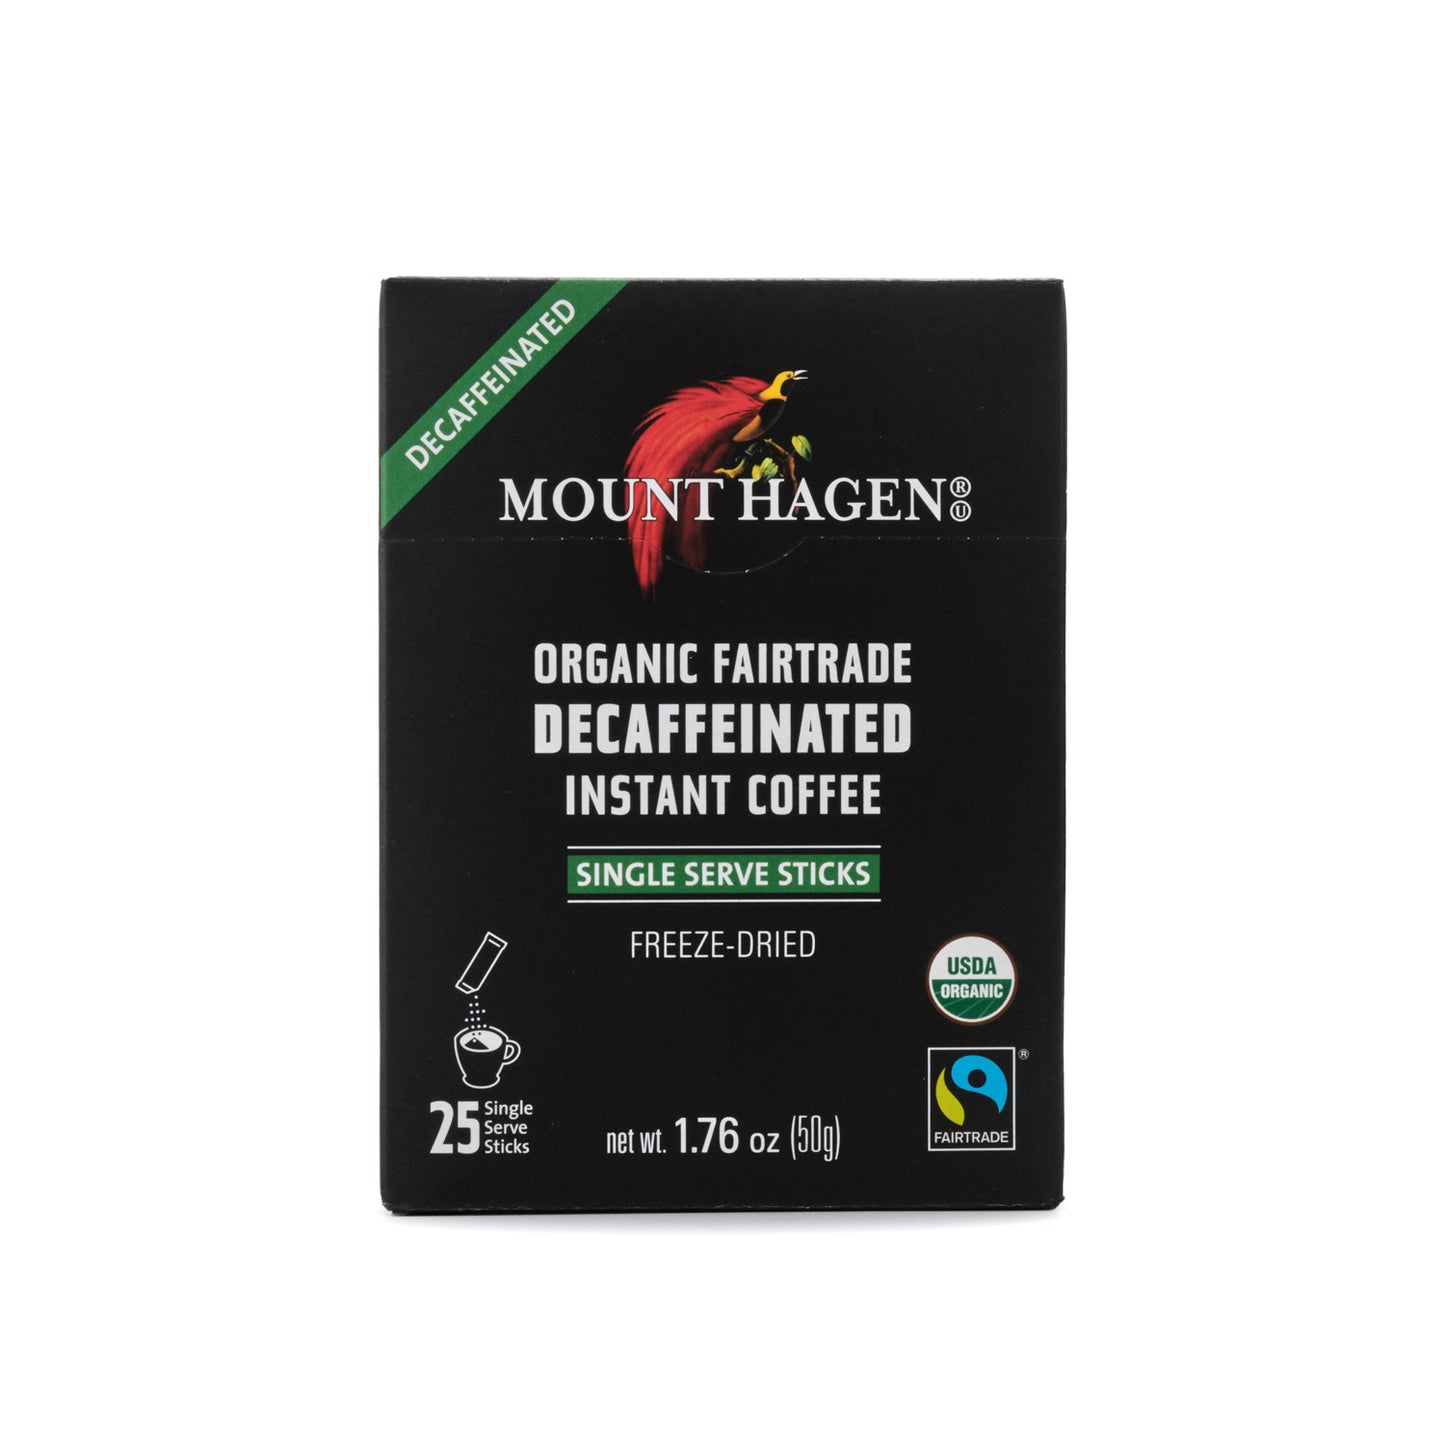 Mount Hagen Organic Instant Coffee Decaf 25 Single Serve Sticks